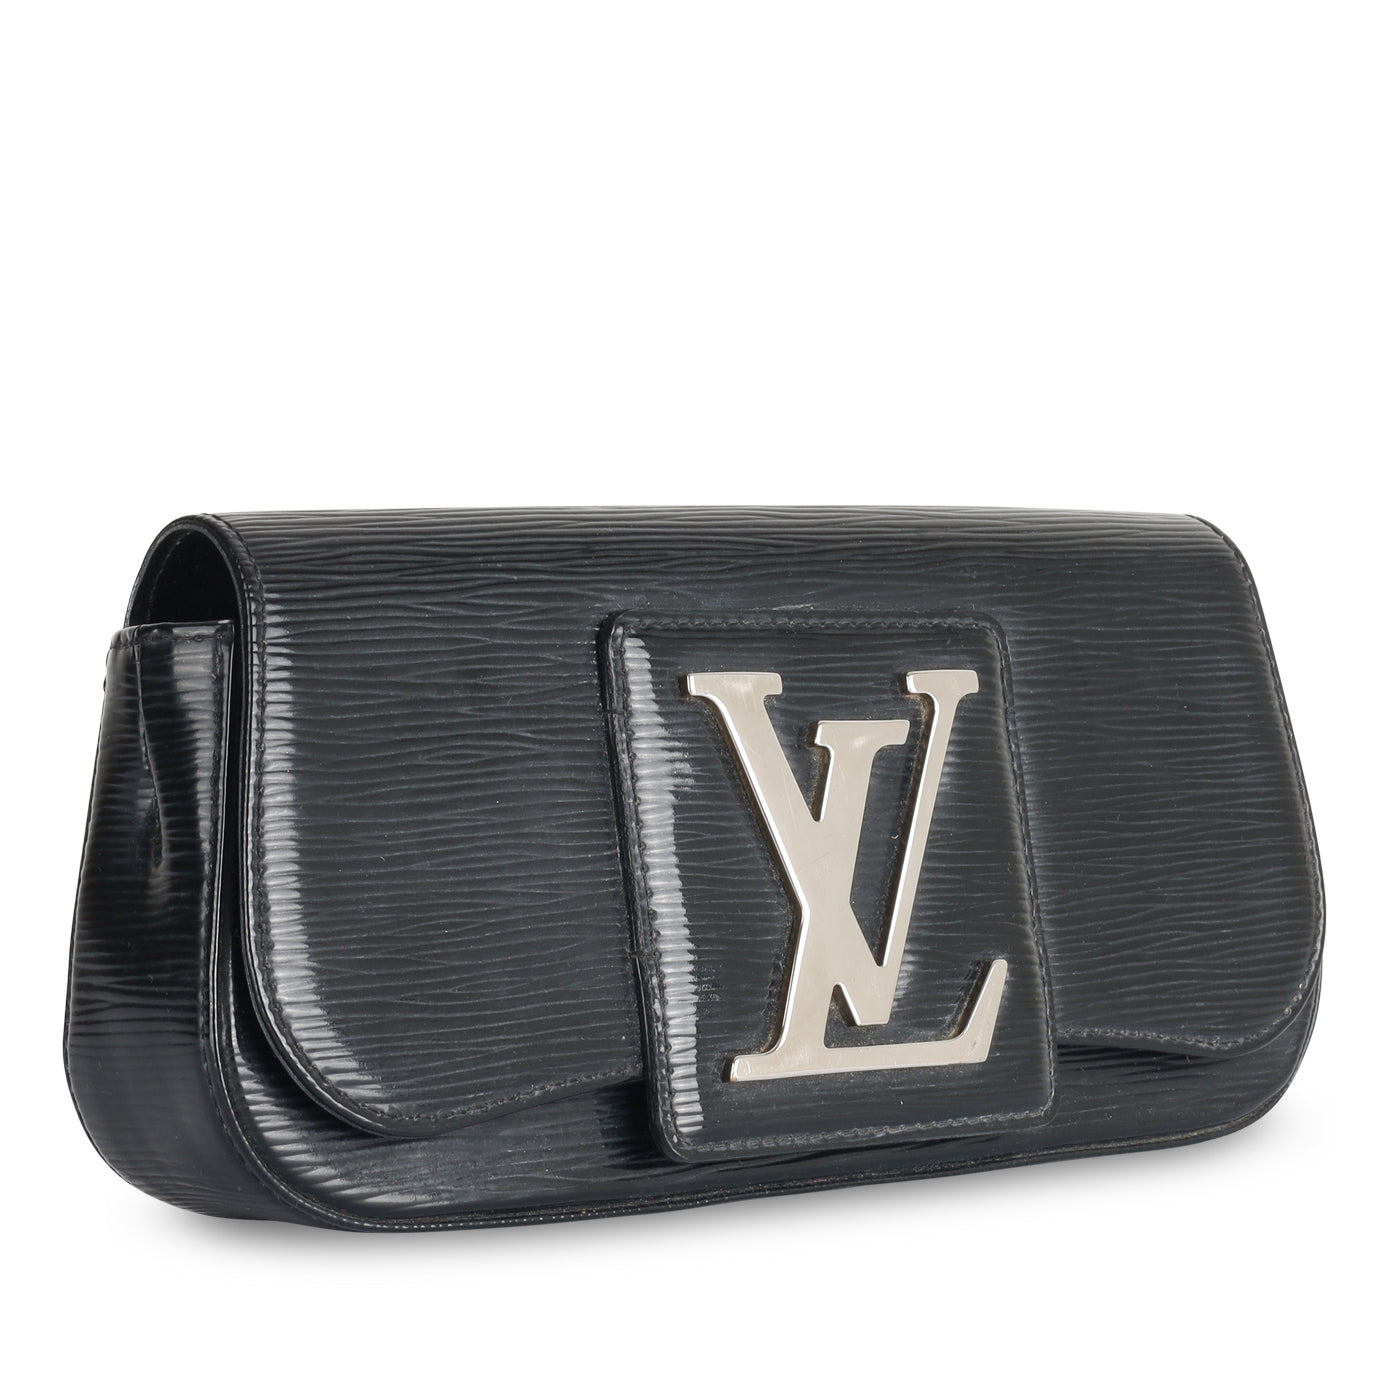 Louis Vuitton - Black Epi Electric Leather Sobe Clutch Bag